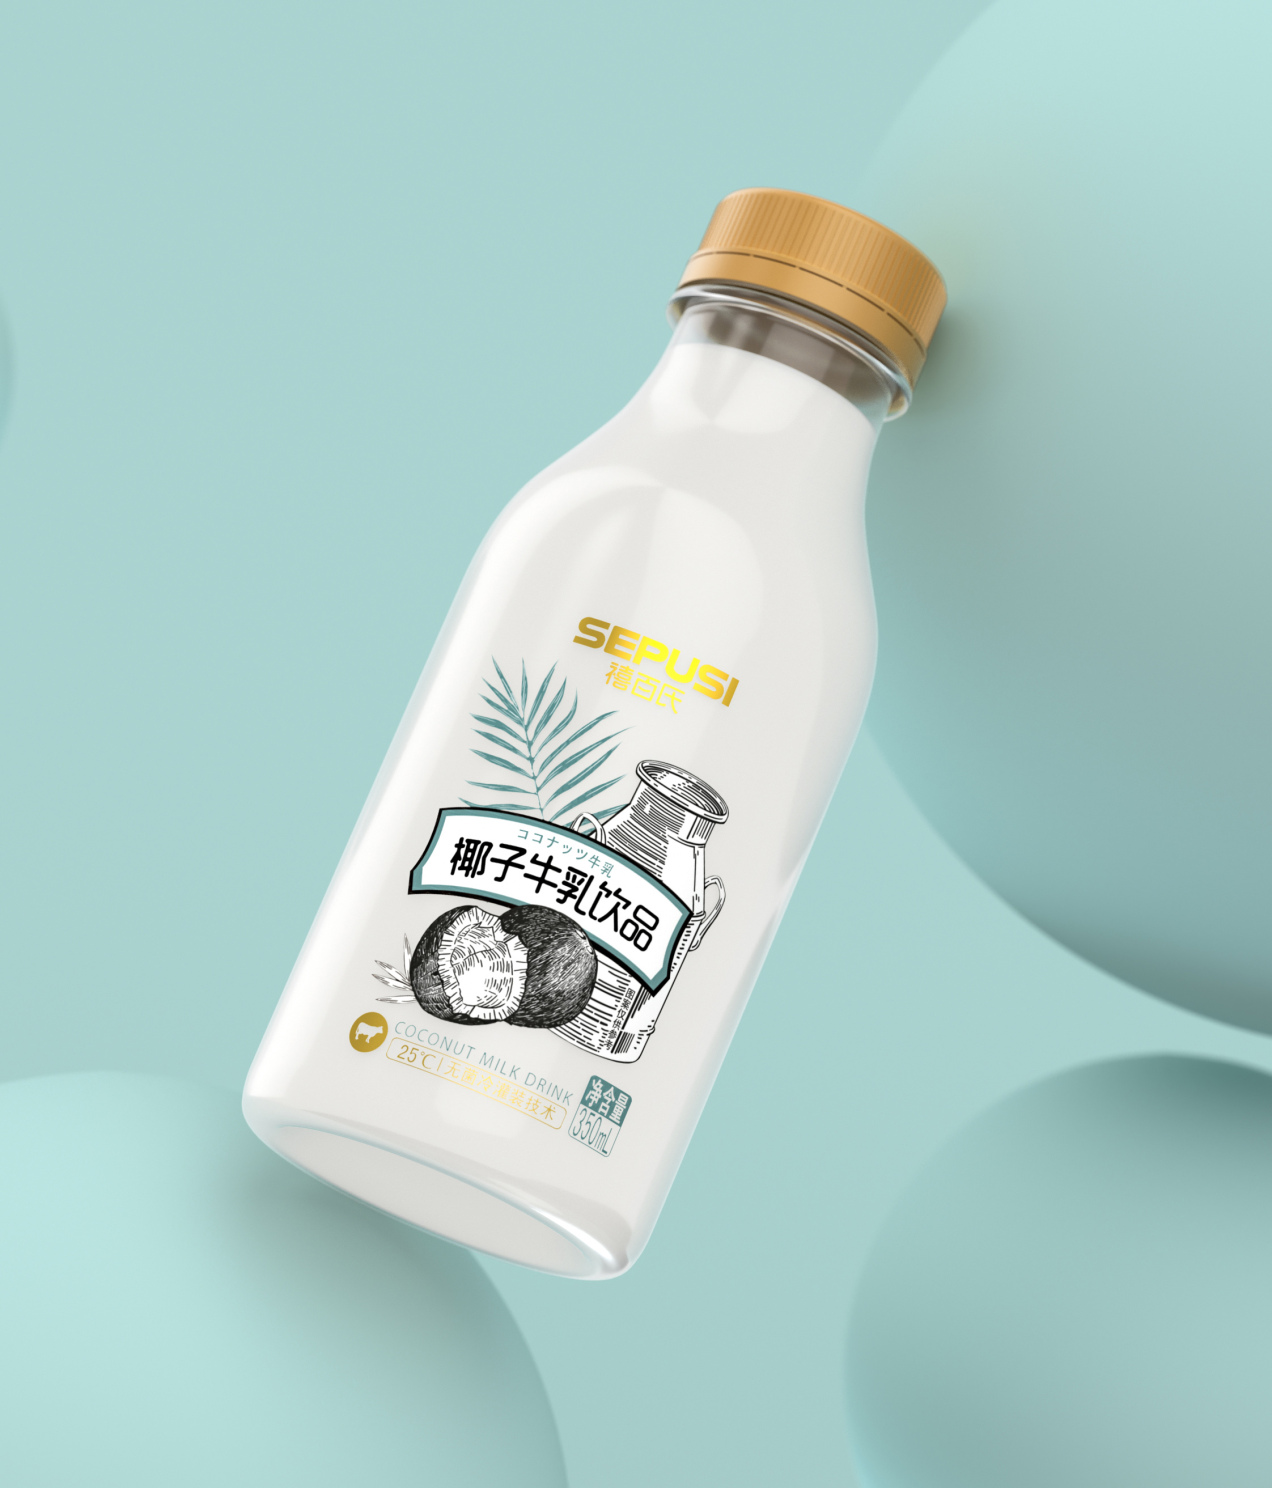 Homemade Kokosnoot Milk From Fresh Kokosnoot 自製椰奶_椰漿的做法大全_椰子奶的家常做法 169 ...